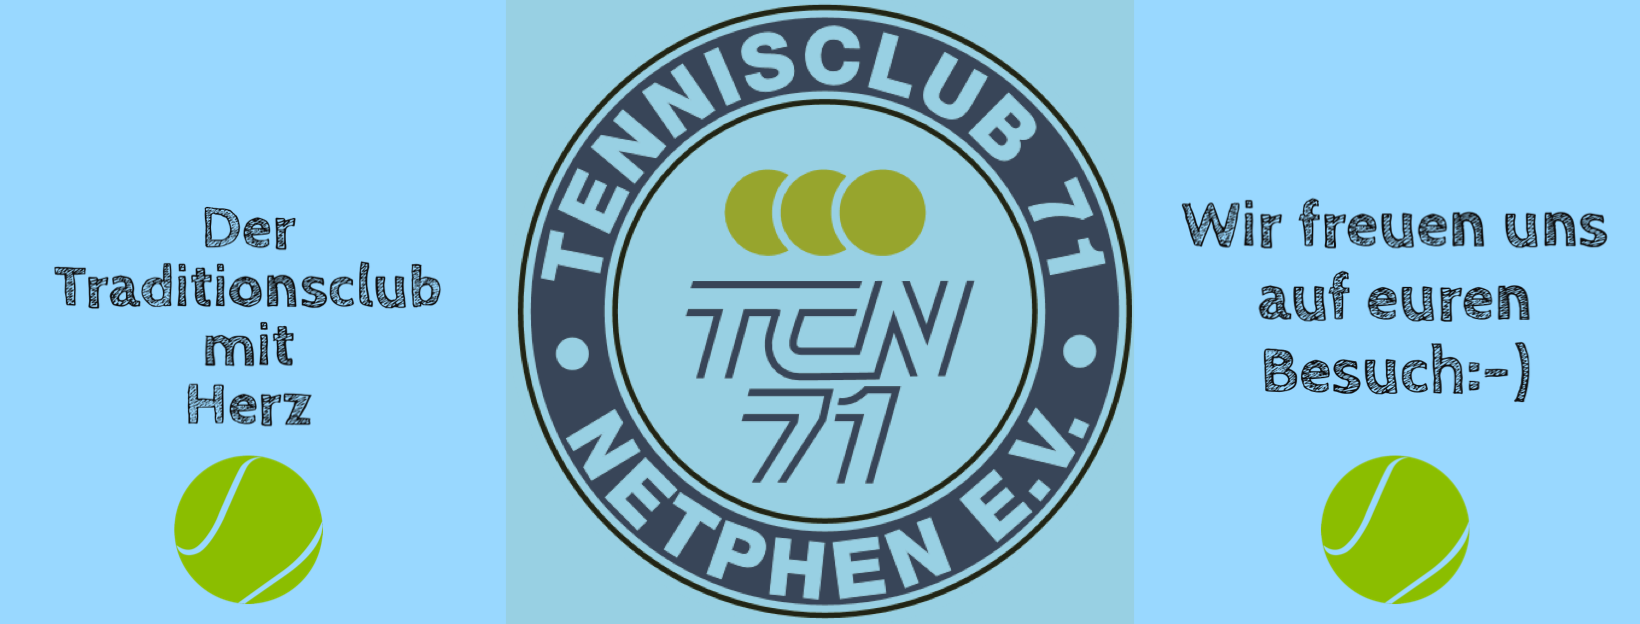 TC71 Netphen